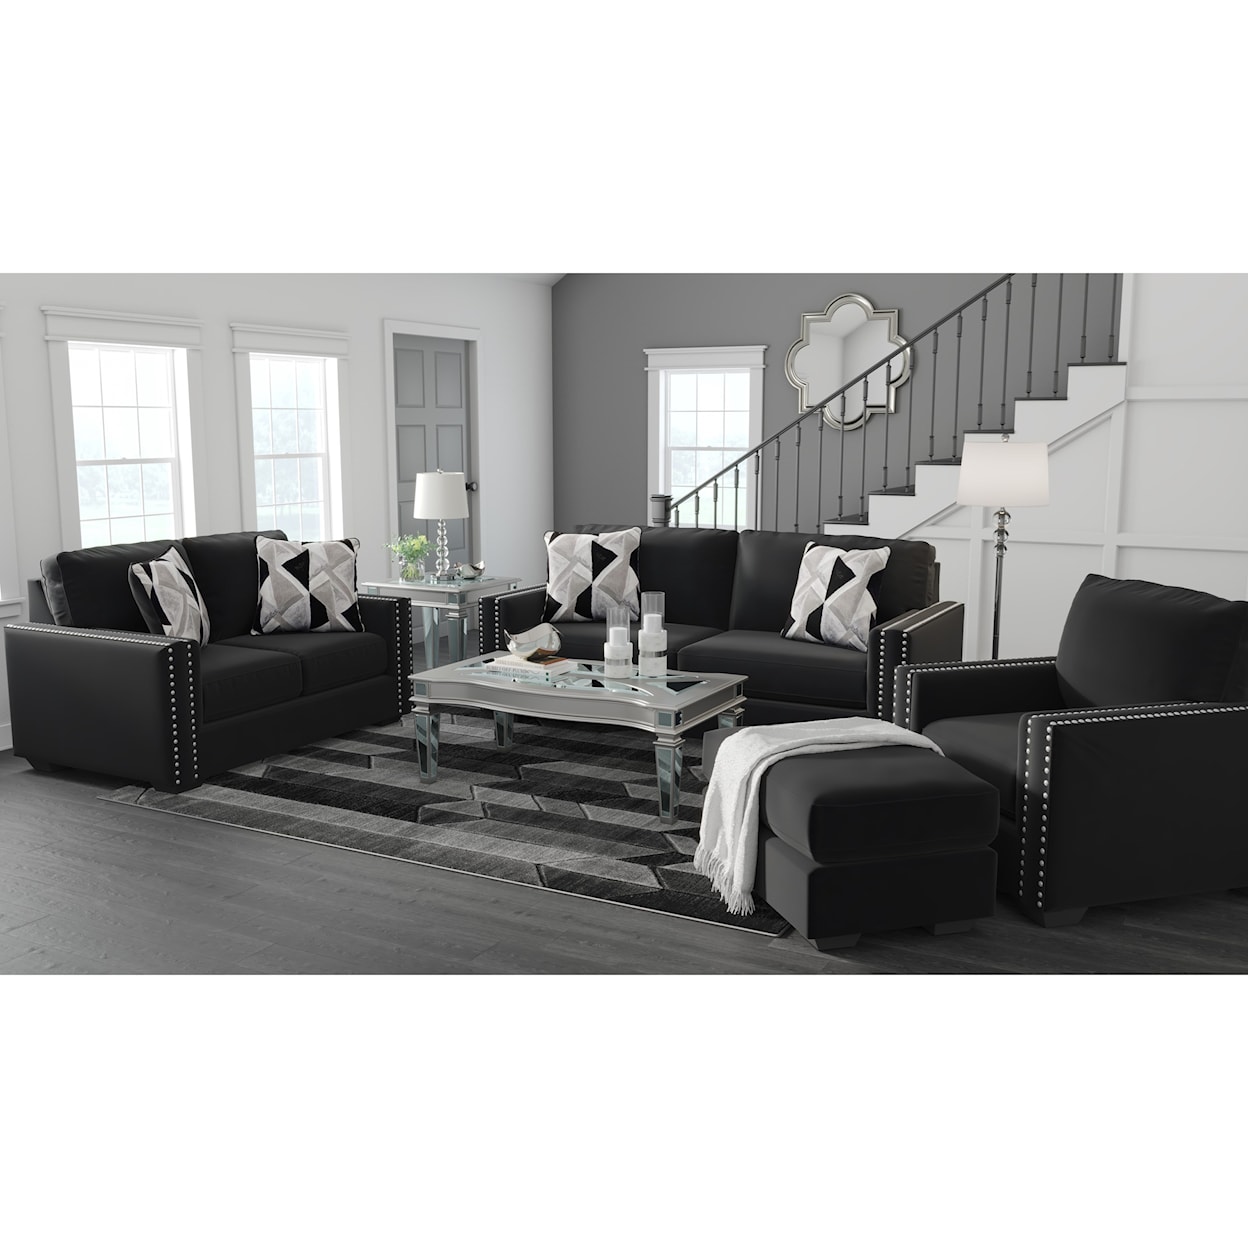 Ashley Furniture Signature Design Gleston Living Room Group